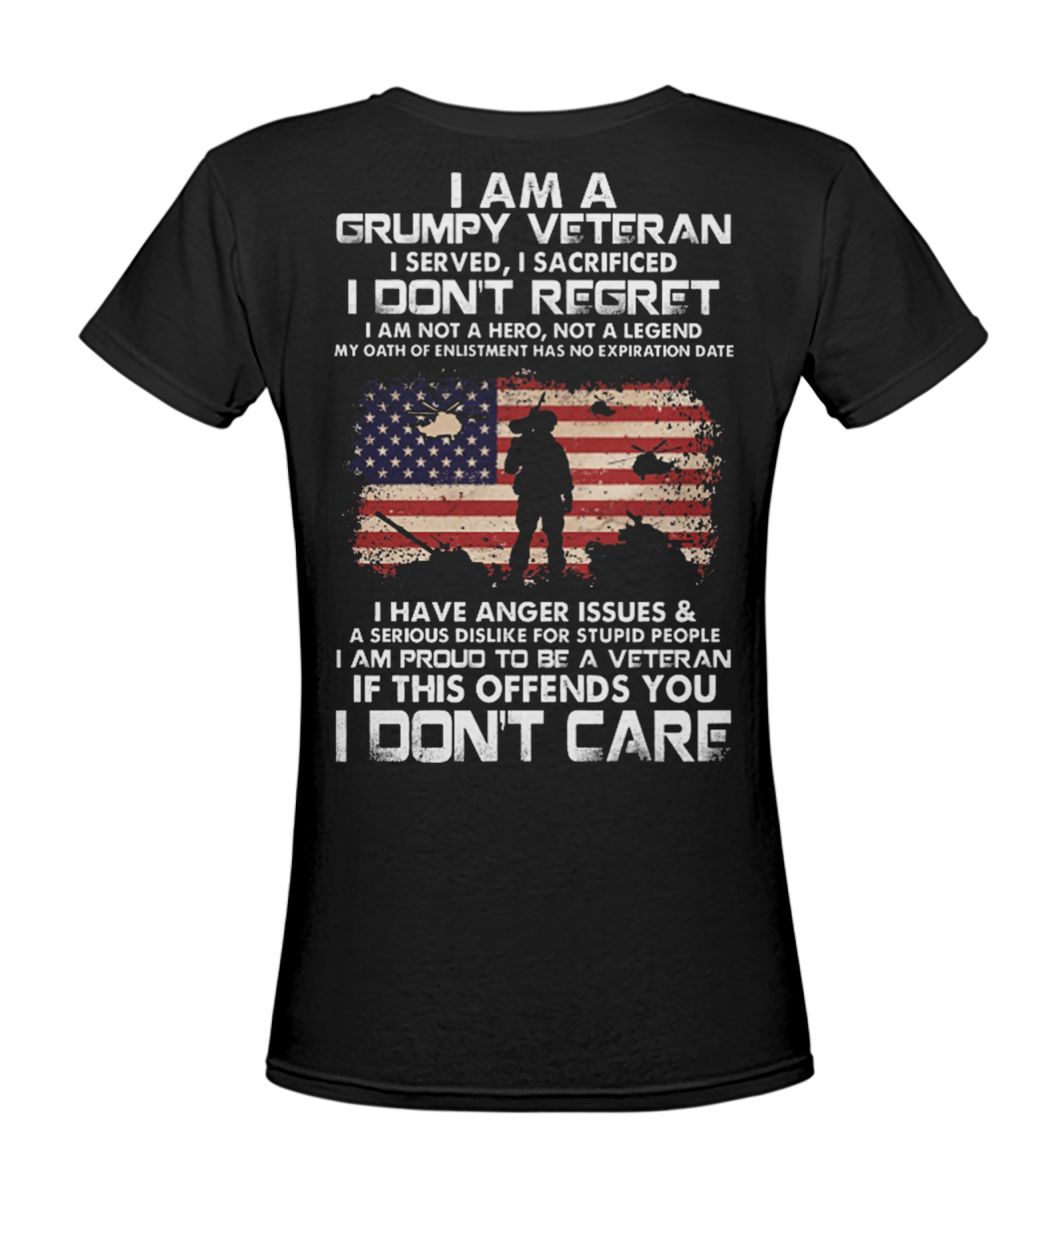 I am a grumpy veteran I served I sacrificed I don't regret women's v-neck